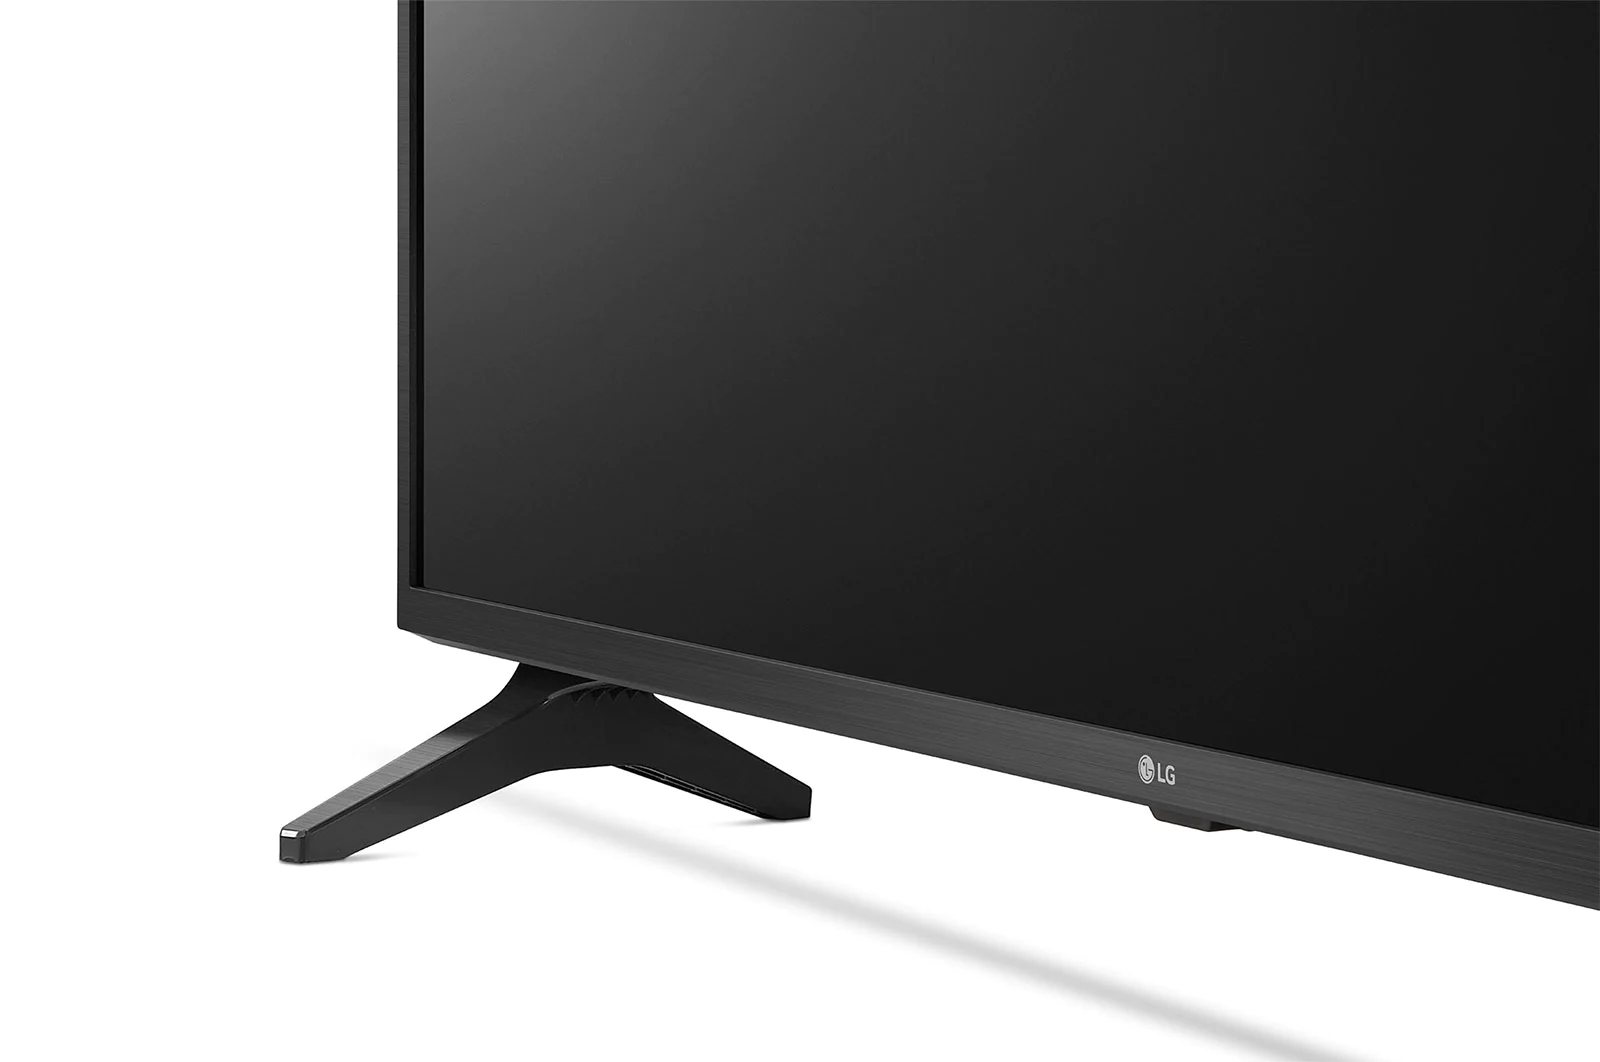 Tv LG de 32 pulgadas led HDR bluetooth smart tv modelo 32LM630B Santa Cruz